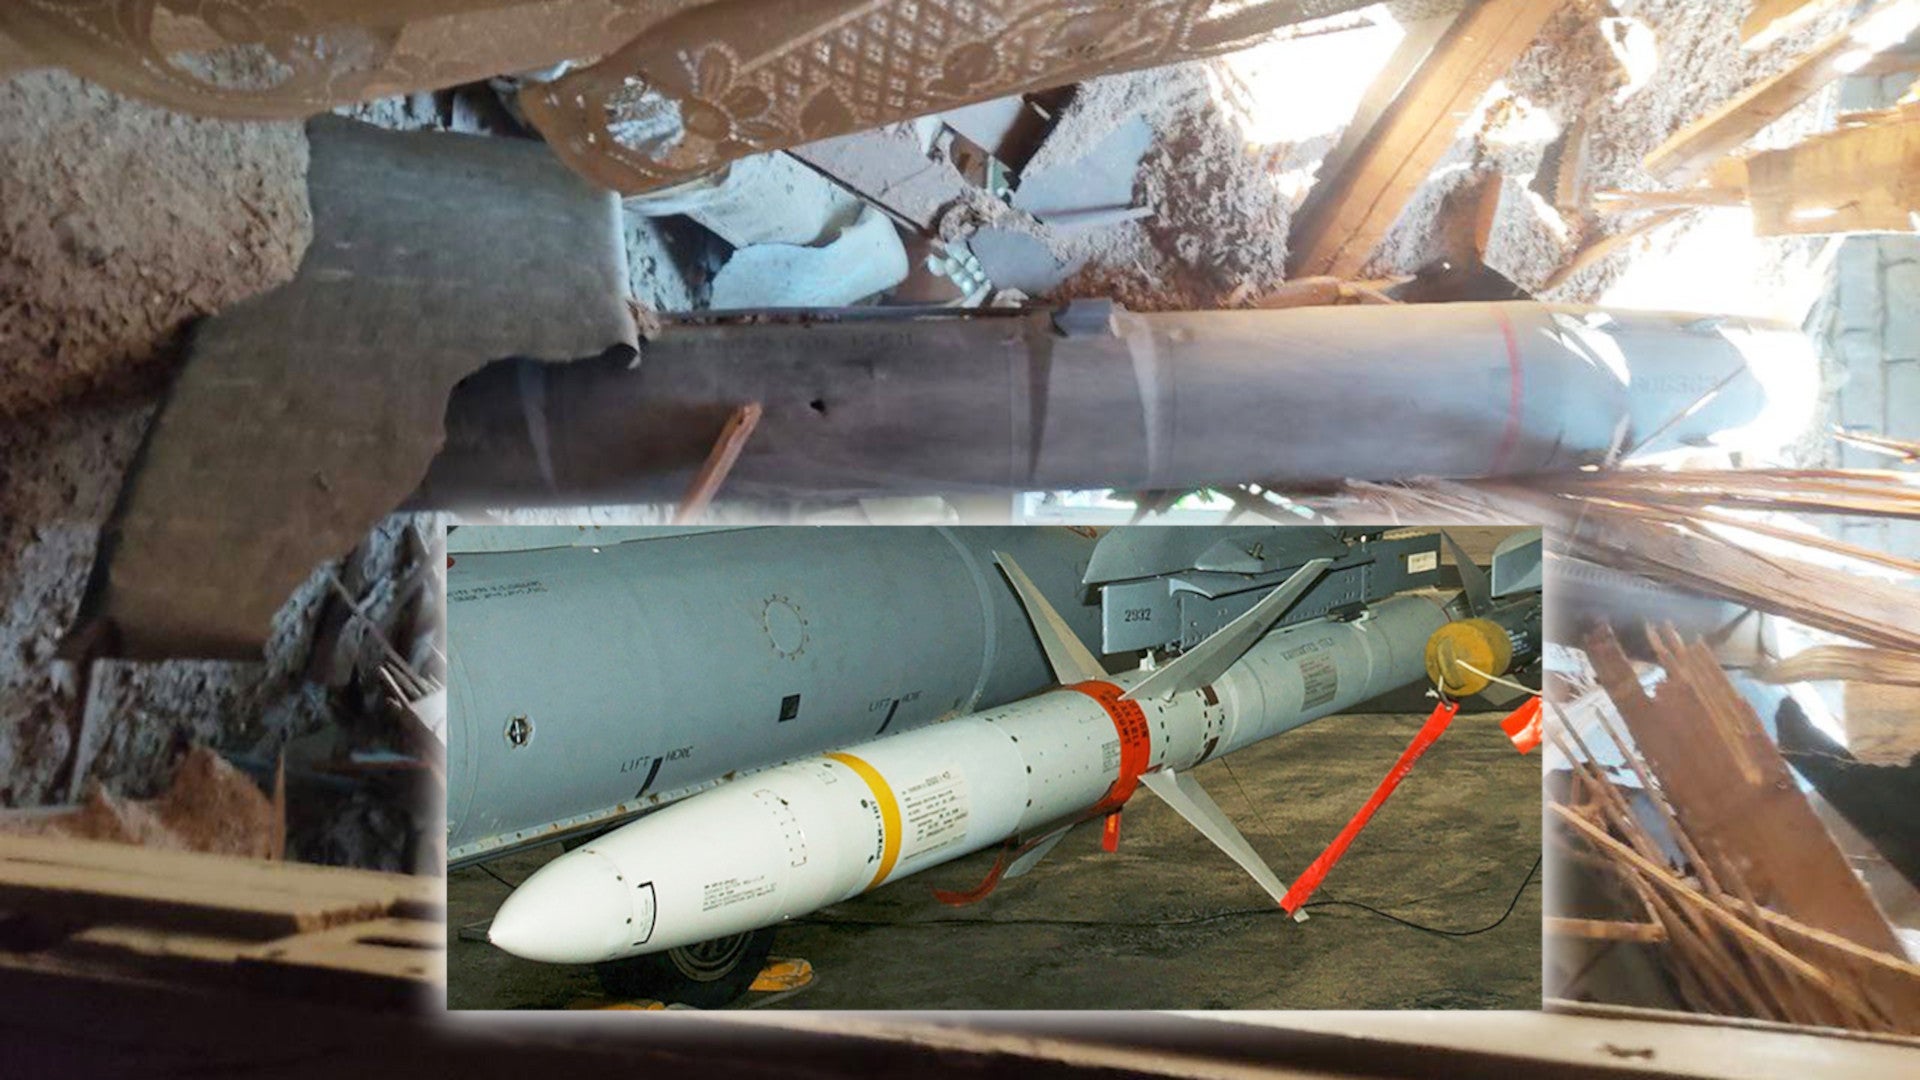 New Evidence Of AGM 88 Anti Radiation Missile Use By Ukraine Emerges